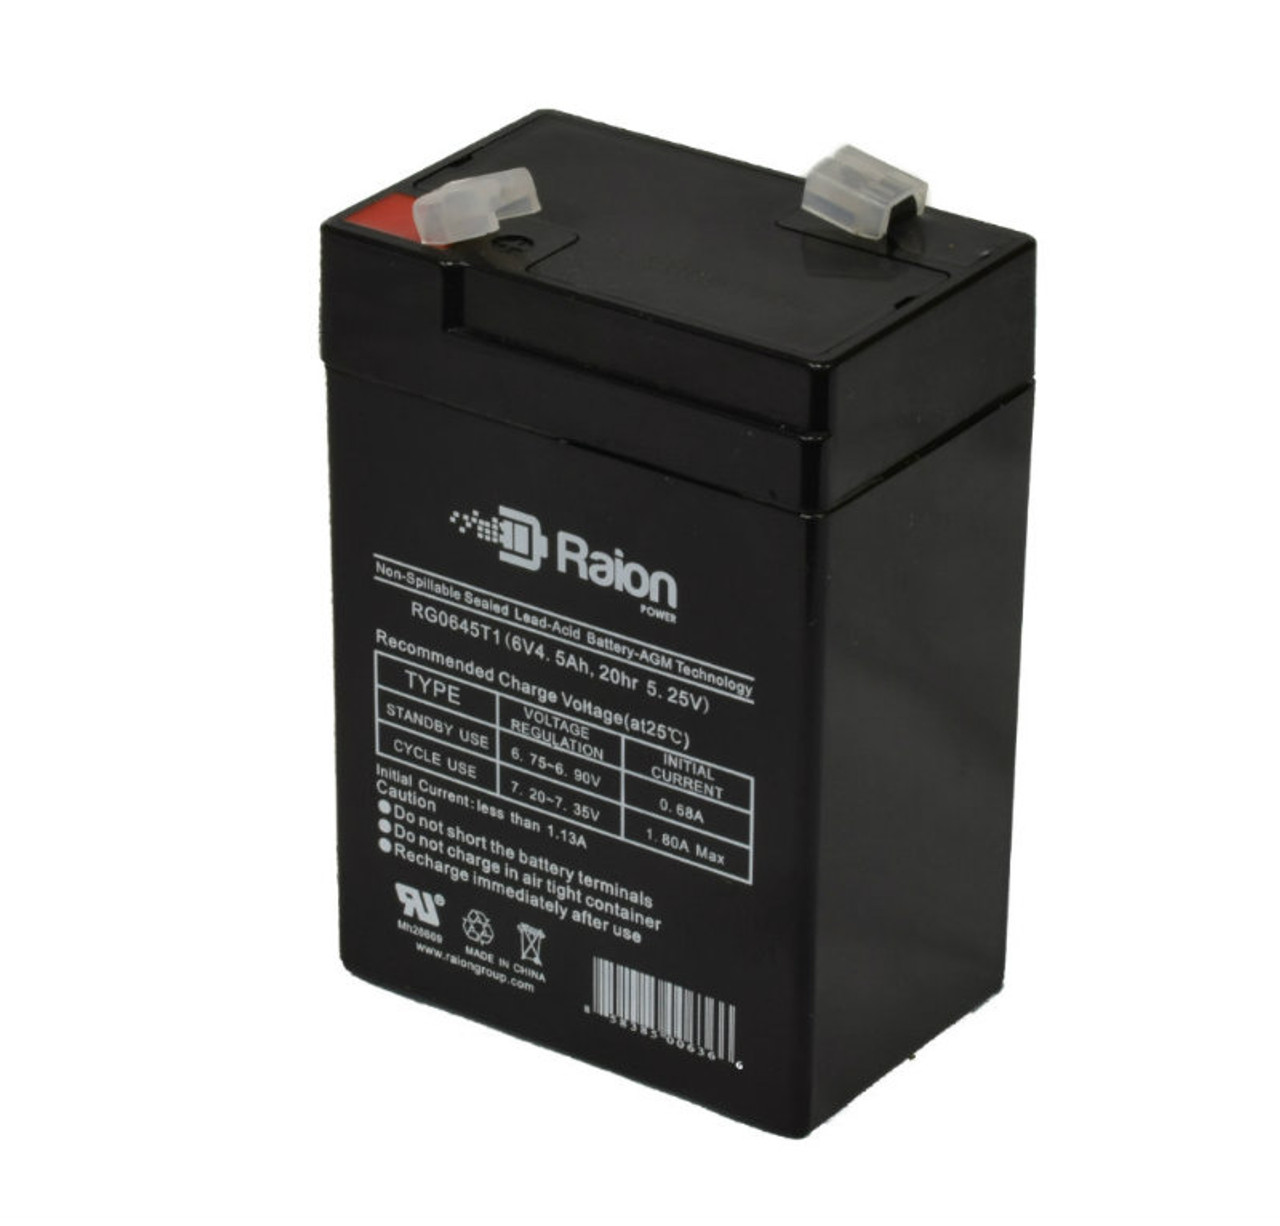 Raion Power RG0645T1 6V 4.5Ah Replacement Battery Cartridge for Teledyne 2RL6S5R